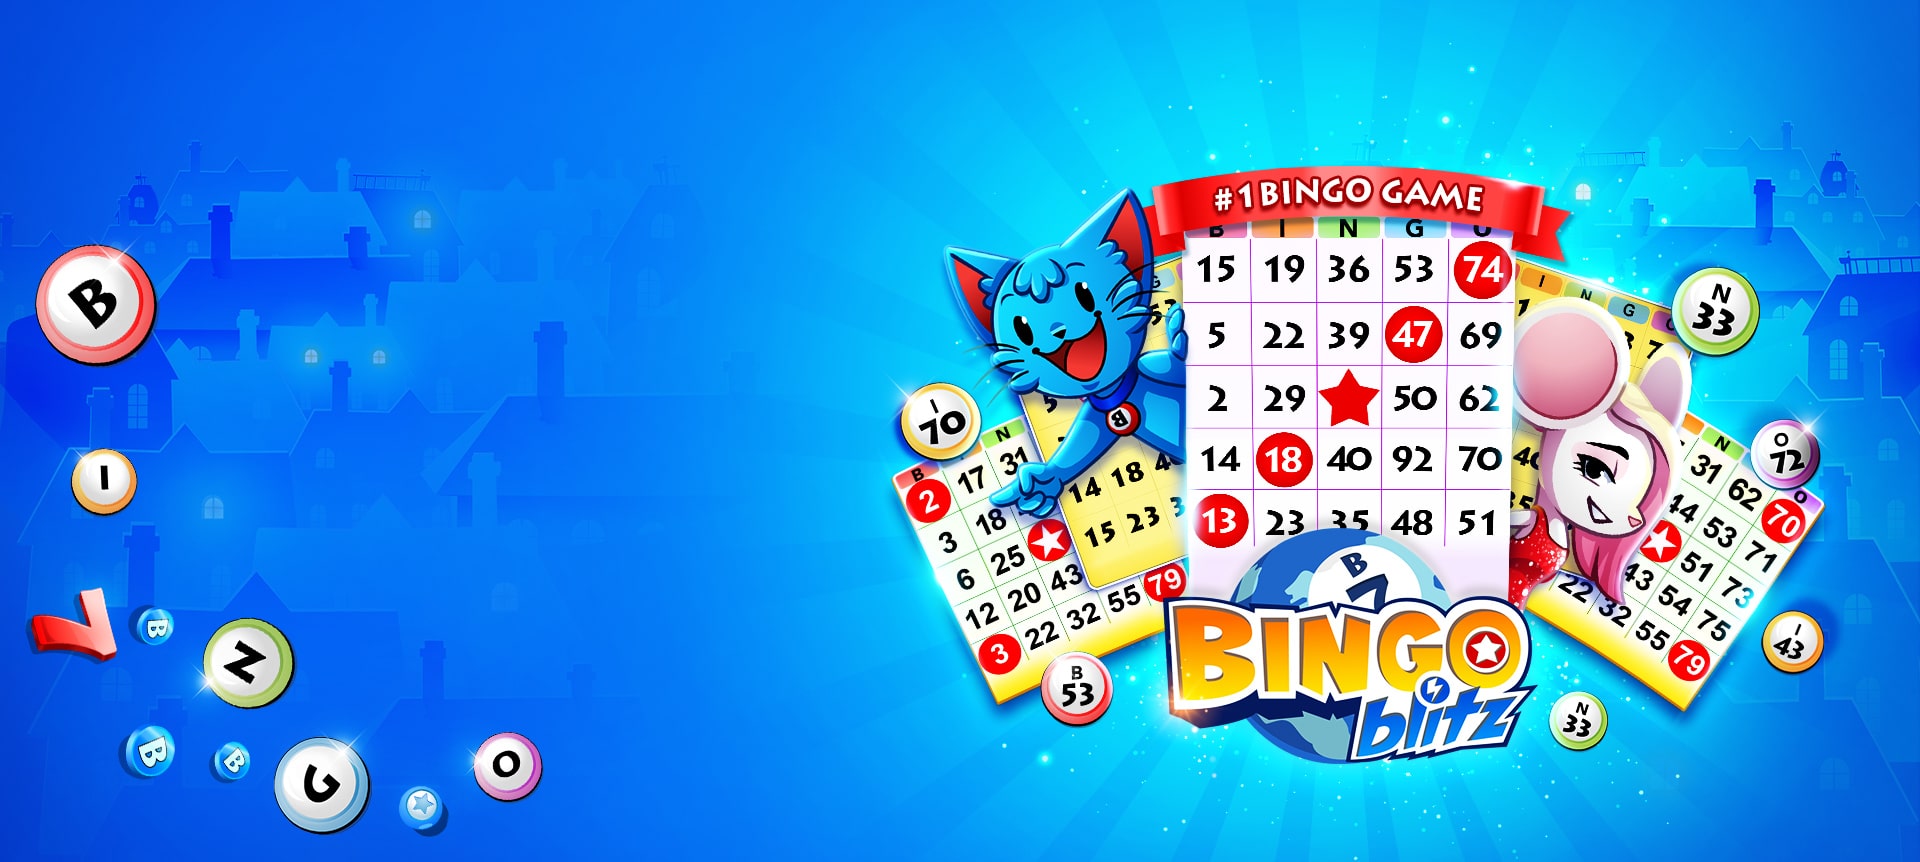 free credits bingo blitz 2020